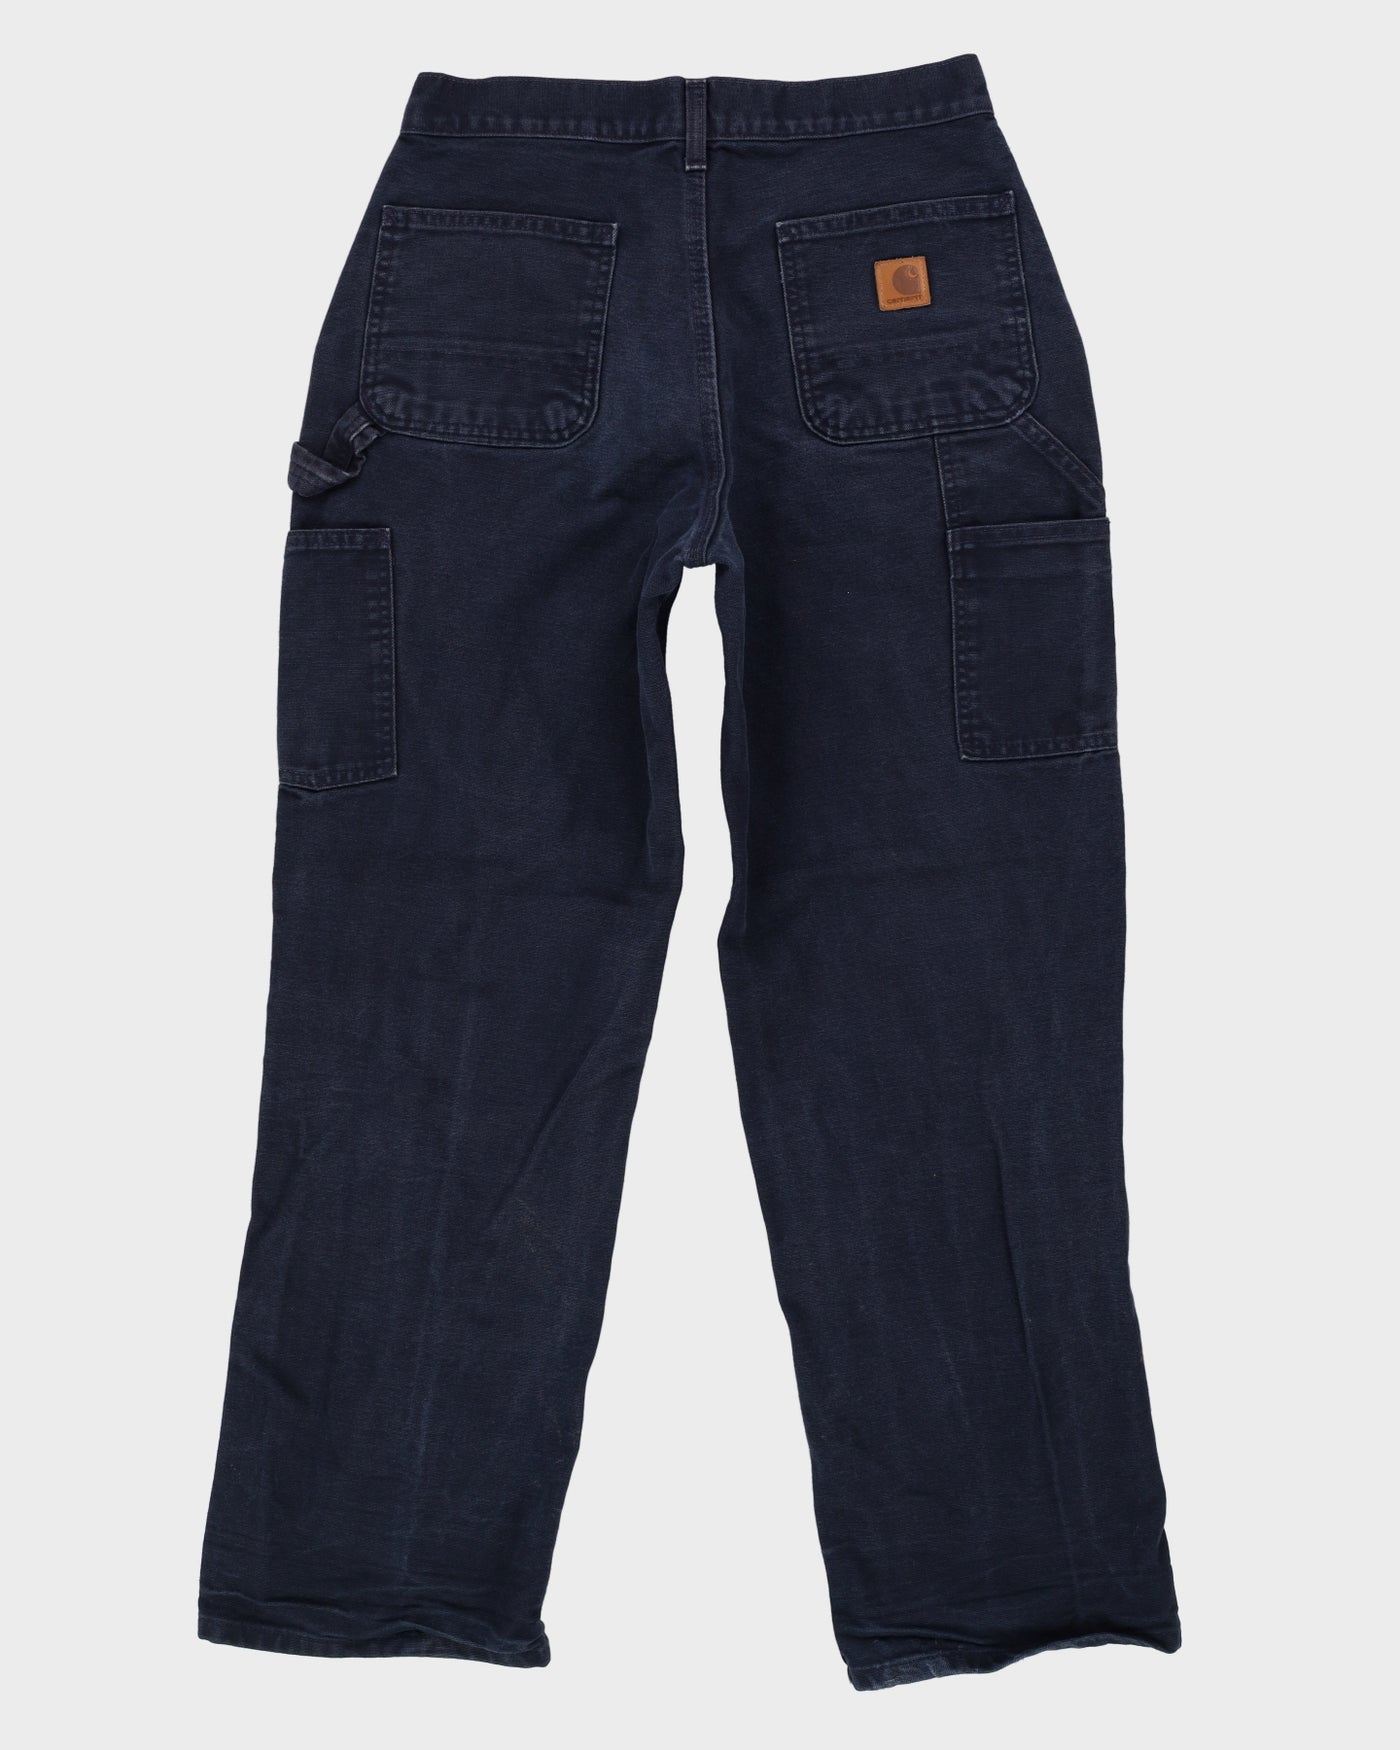 Carhartt Navy Workwear Jeans - W30 L30